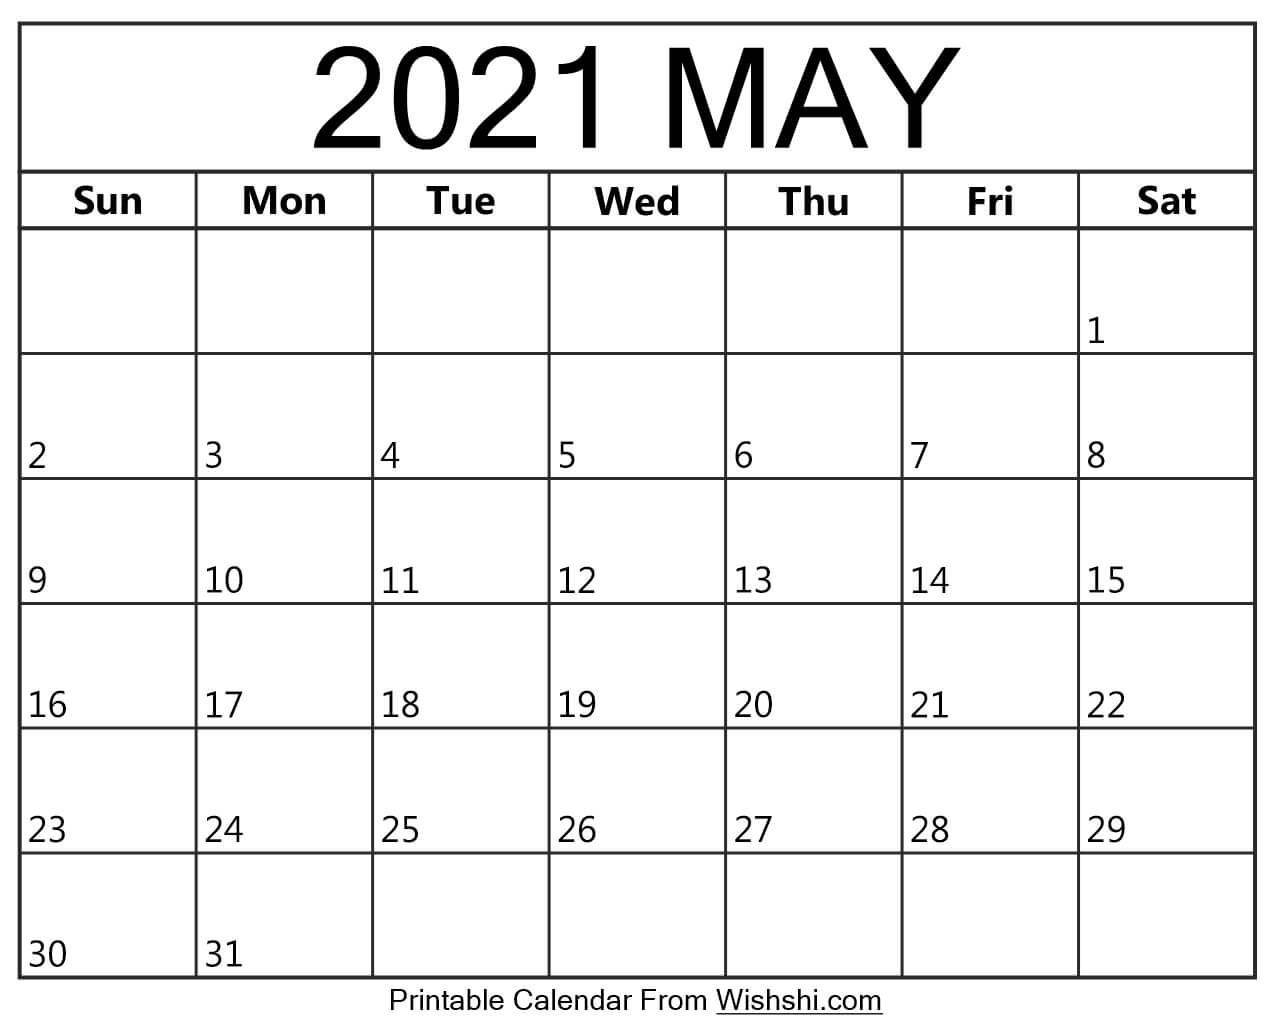 May 2021 Calendar Printable - Free Printable Calendars May-Blank Calendars 2021 Printable